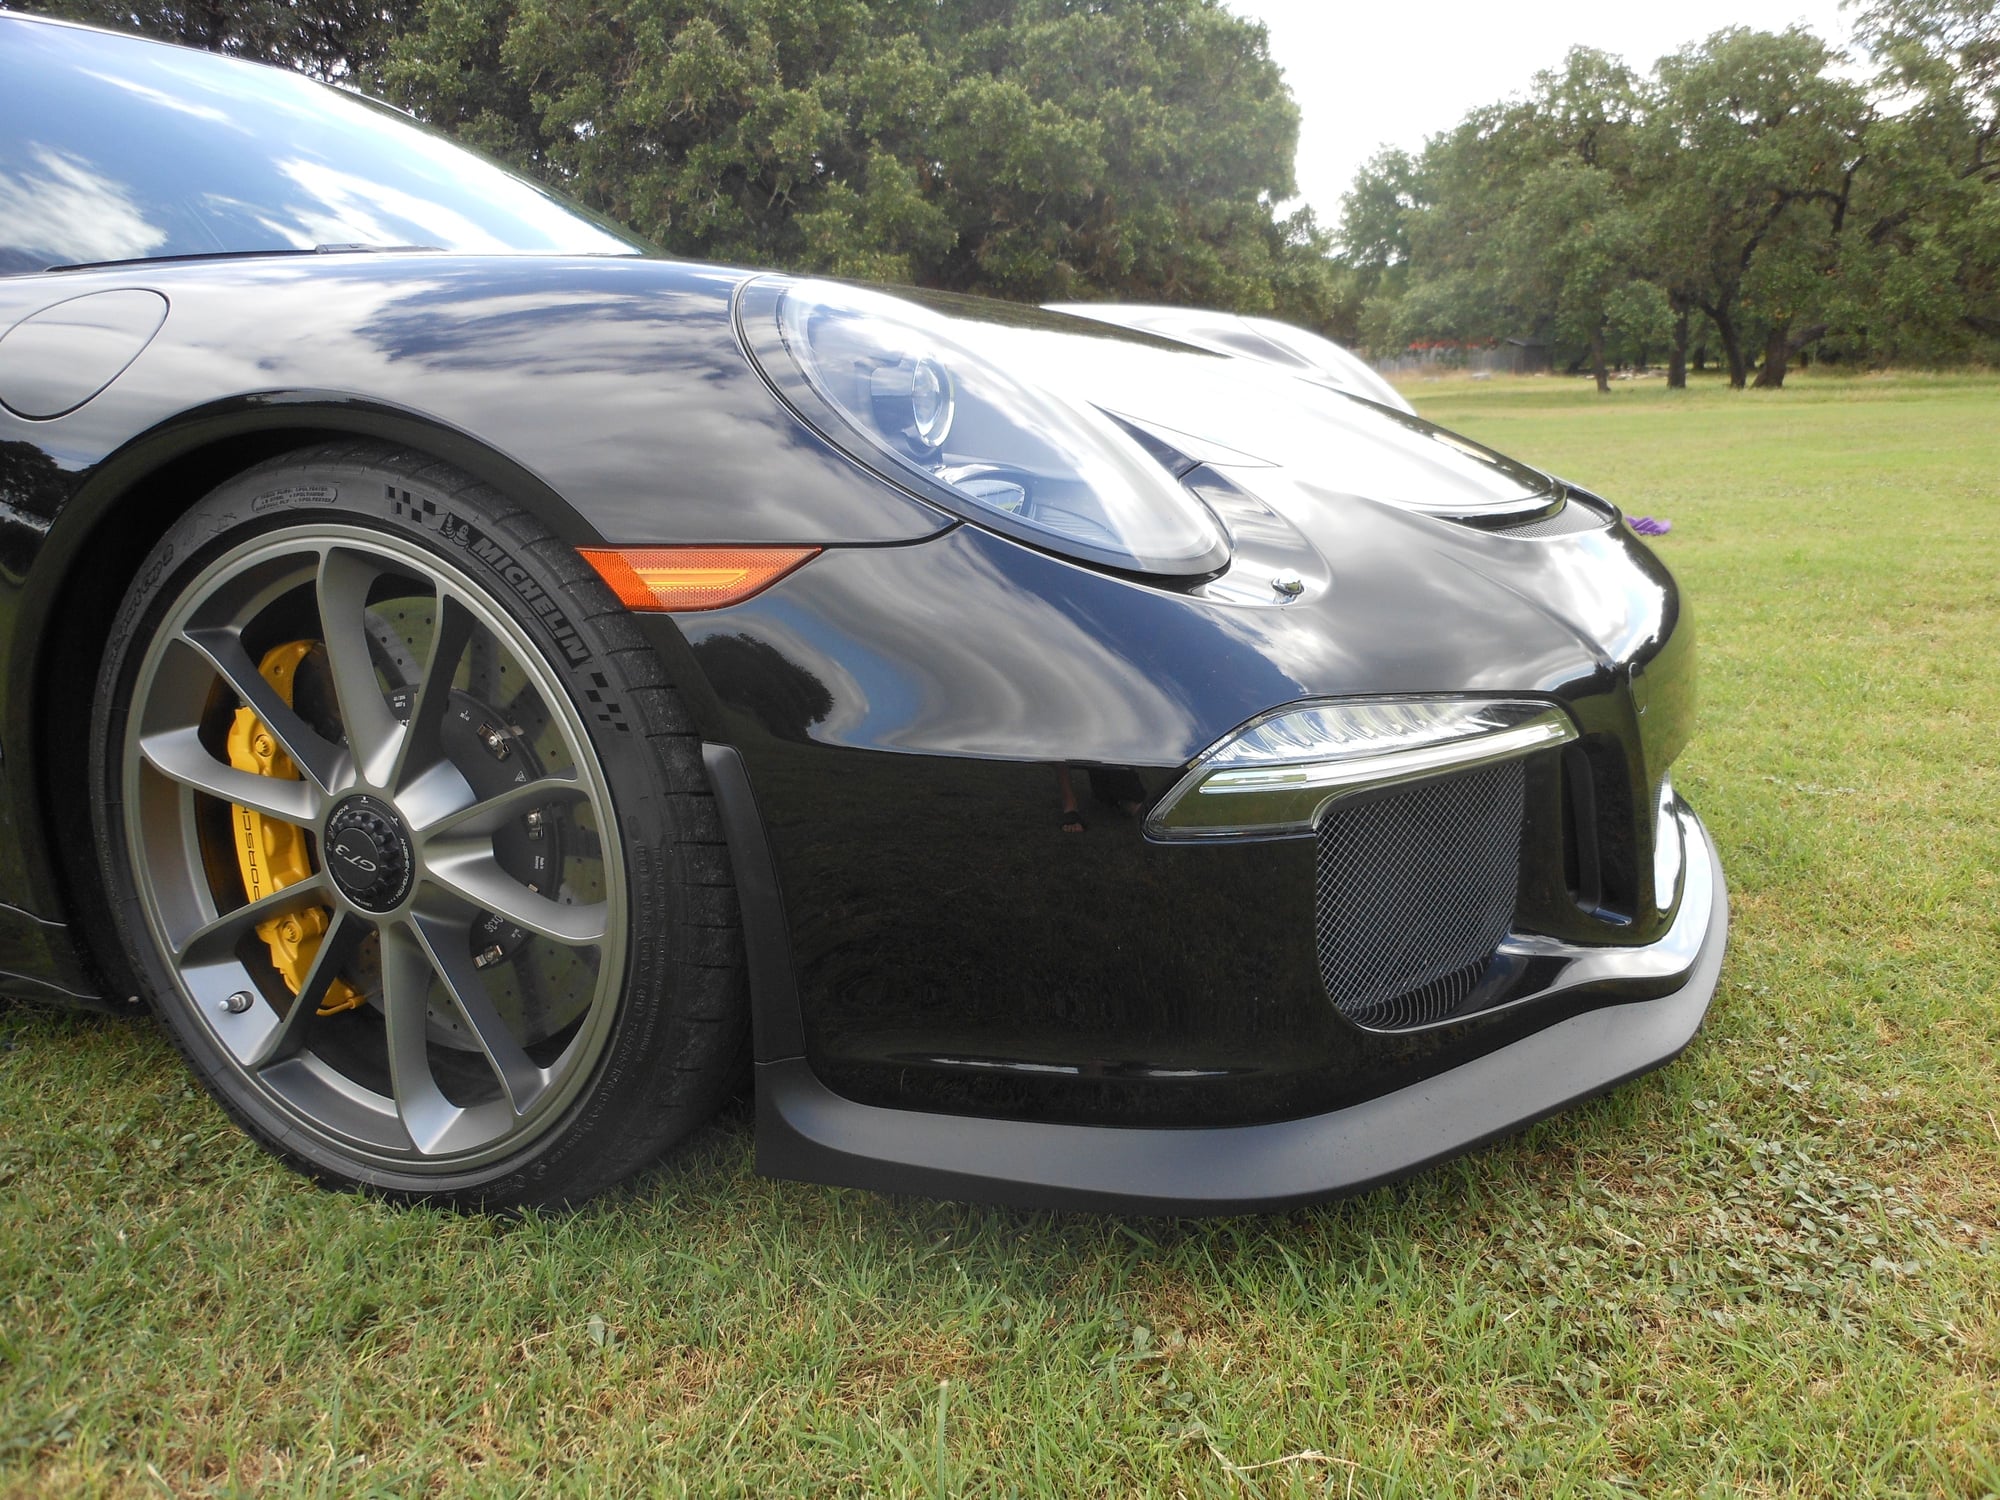 2015 Porsche GT3 - 2015 Porsche GT3 ***CPO*** - Used - VIN WP0AC2A99FS183576 - 19,487 Miles - 6 cyl - 2WD - Automatic - Coupe - Black - Austin, TX 78739, United States